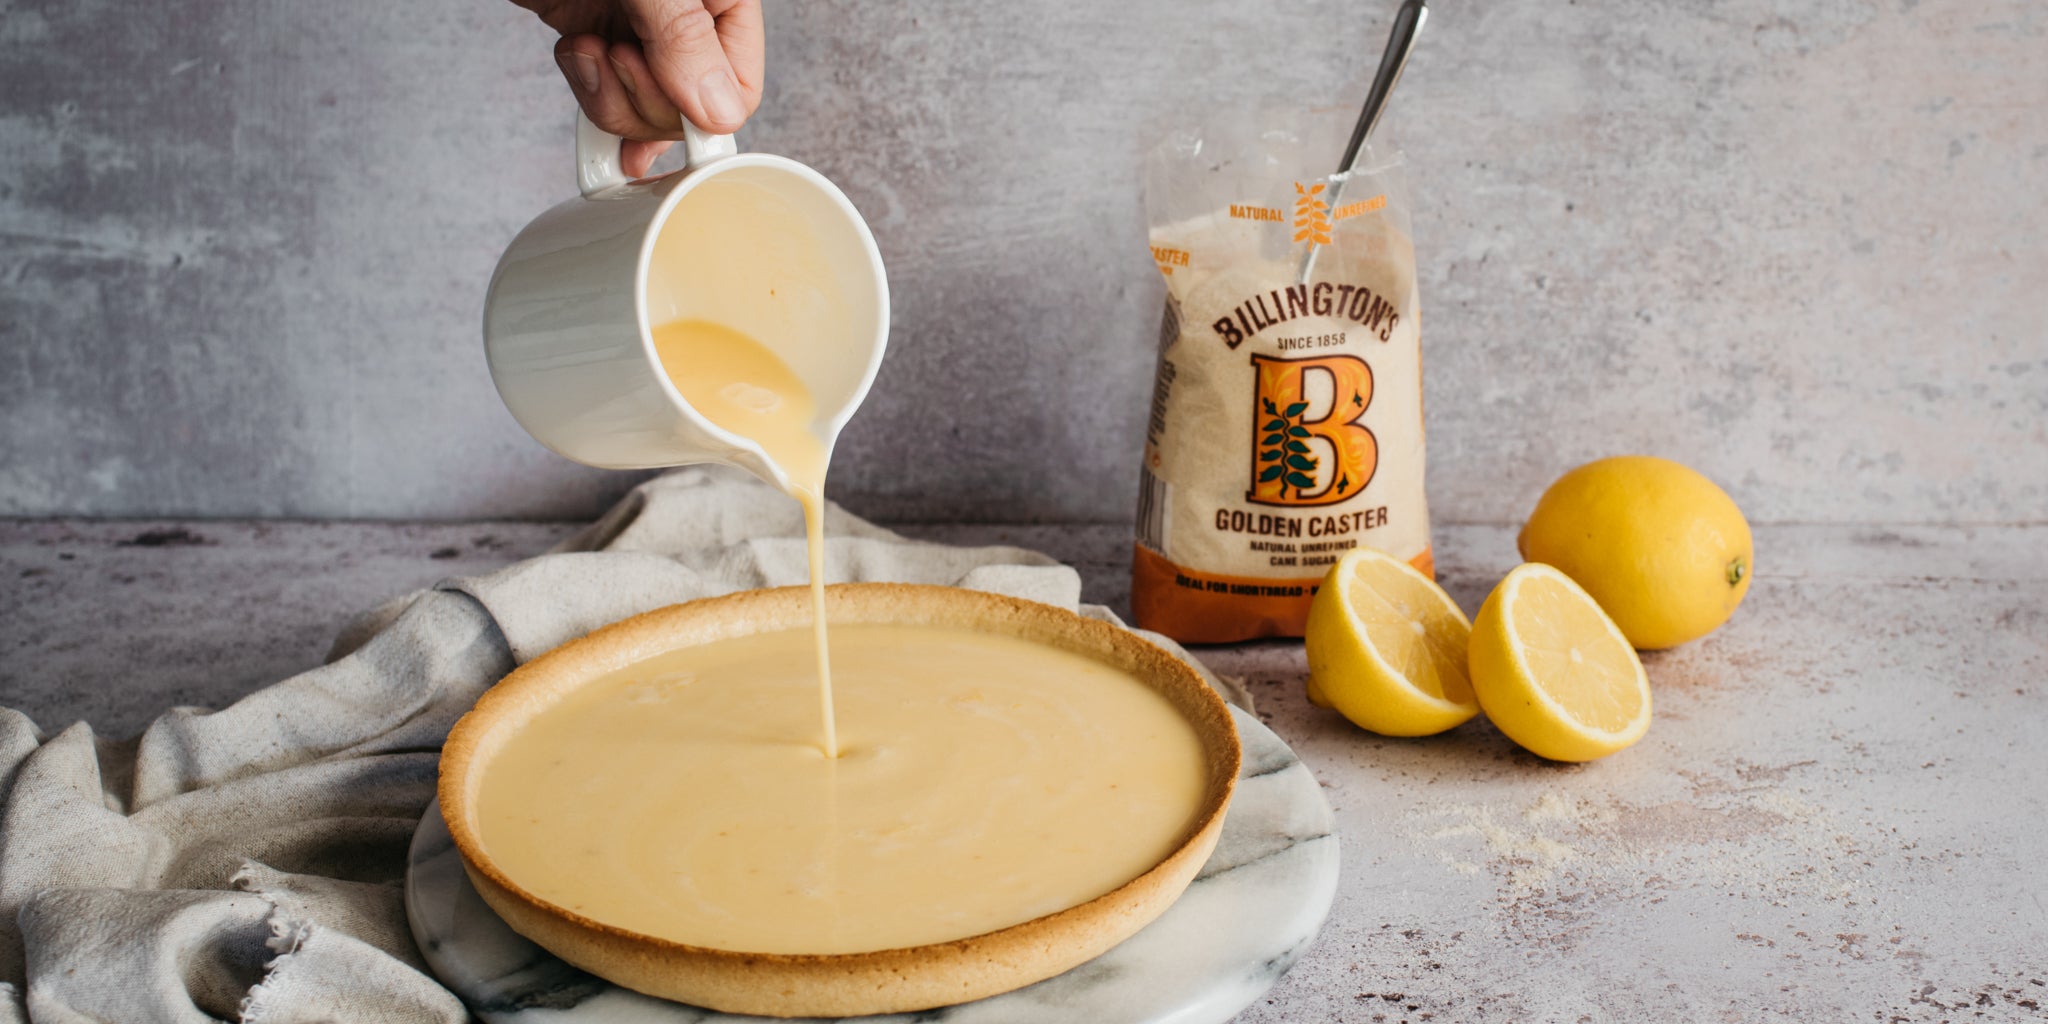 Lemon Tart being filled with hand holding a jug pouring lemon filling into the pie base, next to a bag of Billington's Golden Caster Sugar